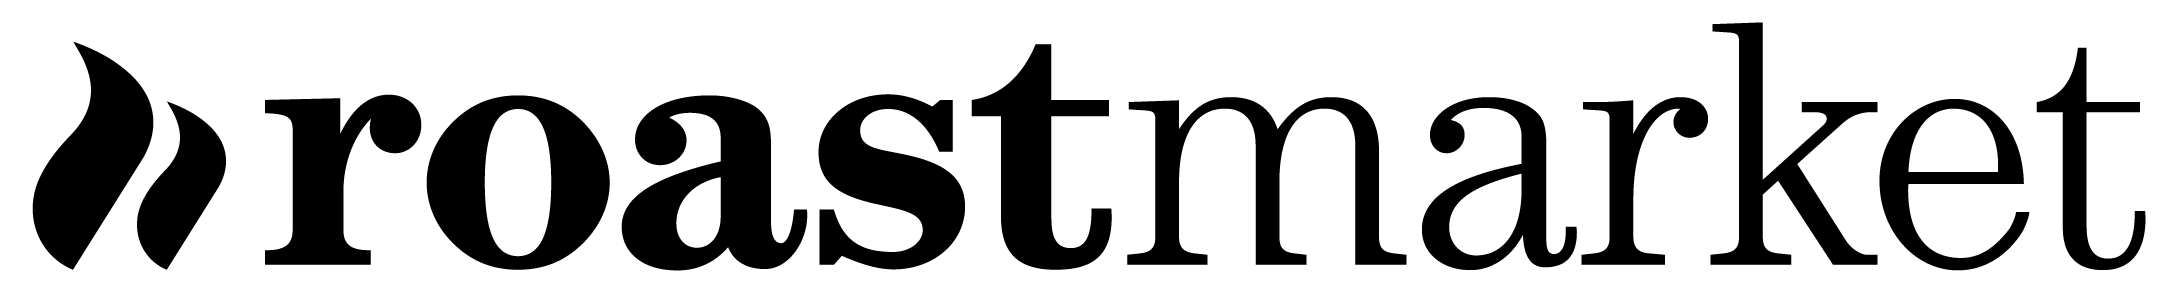 Logo Roastmarket